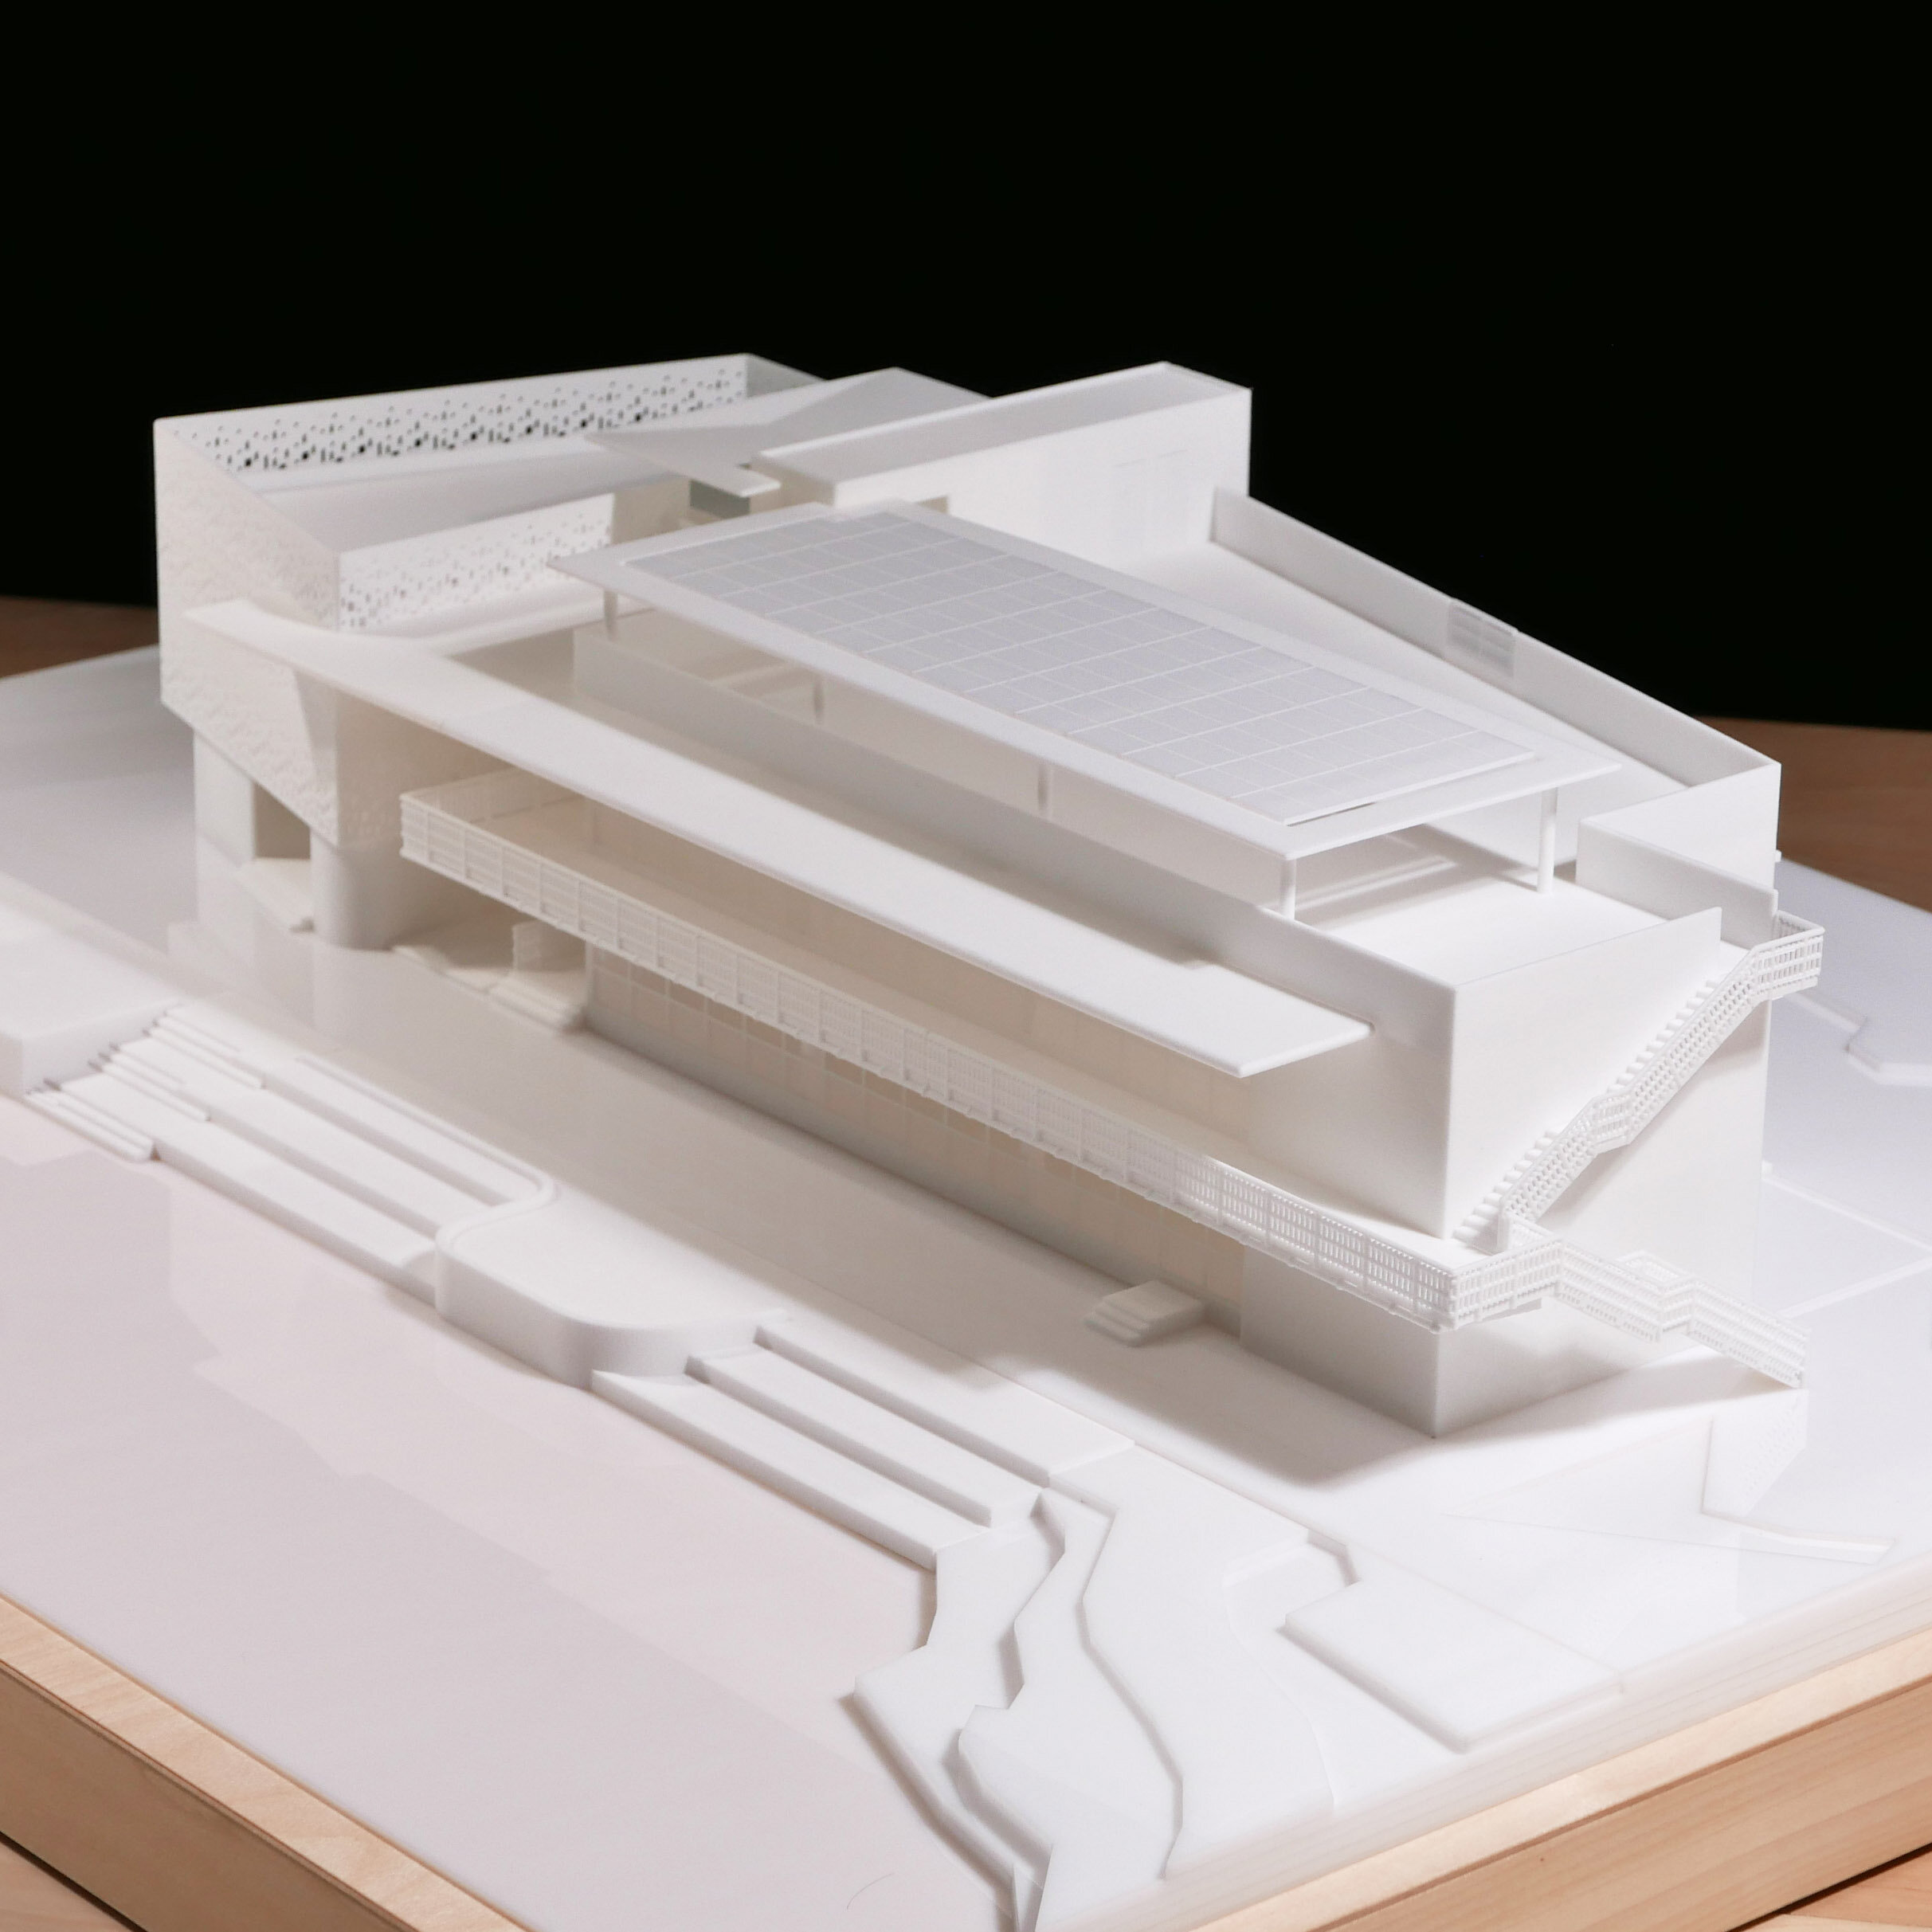 laser-cutting-architectural-site-model.jpg